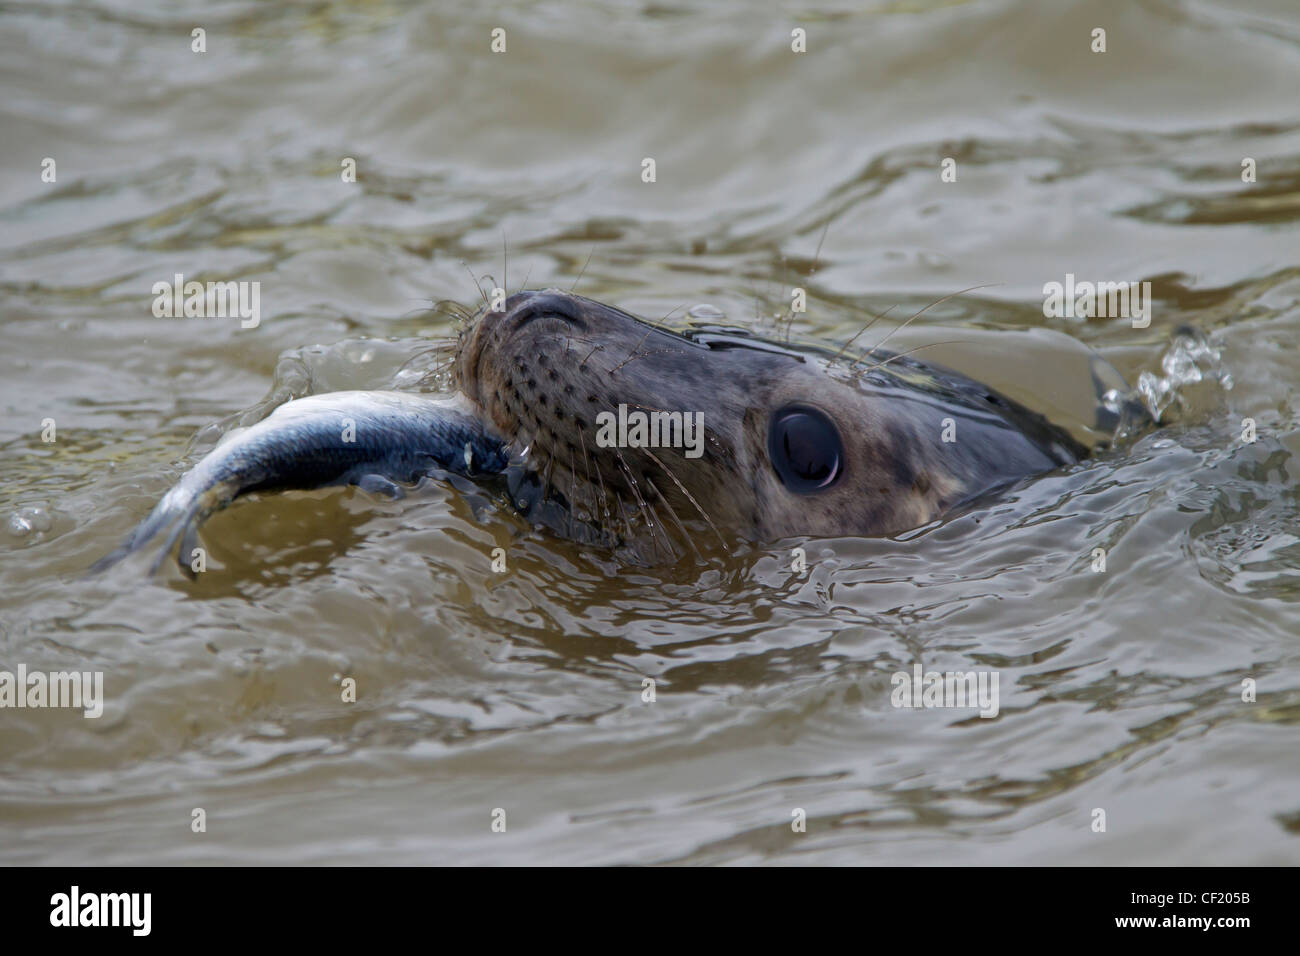 Juvenile, Grey seal / gray seal (Halichoerus grypus) eating fish at the seal rehabilitation centre Friedrichskoog, Germany Stock Photo